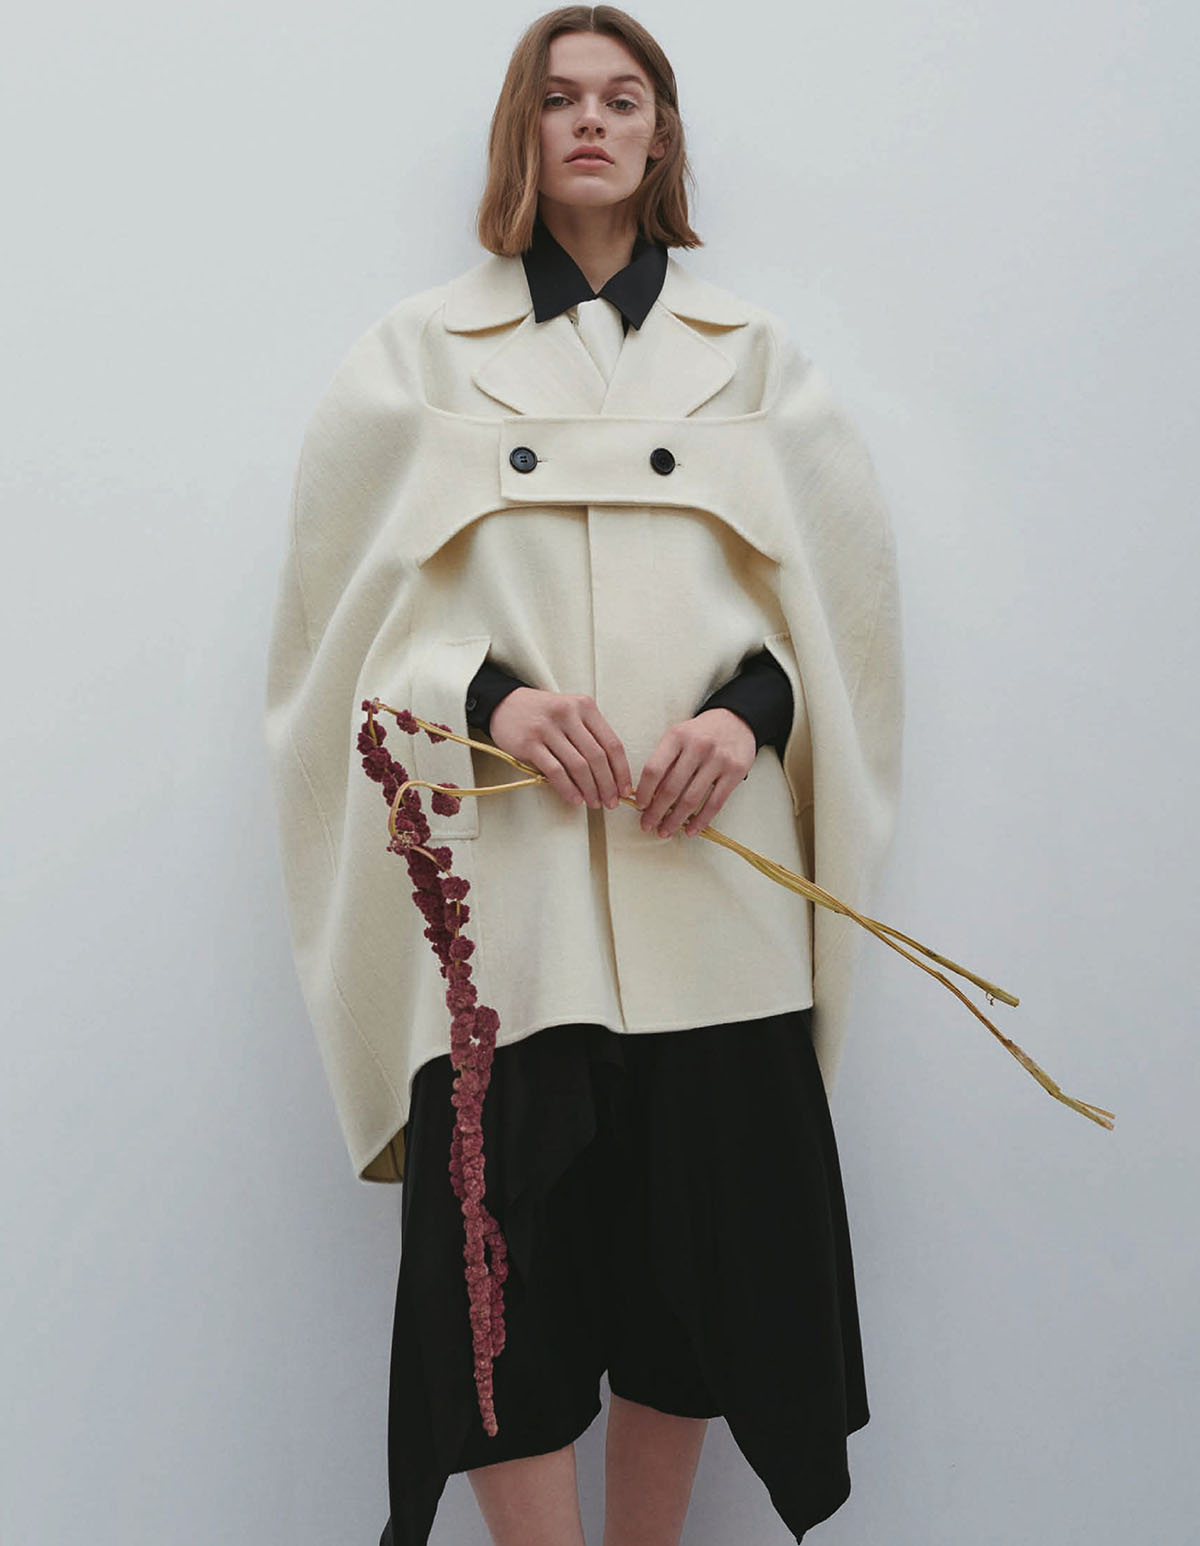 Cara Taylor by Thomas Slack for Vogue China February 2021